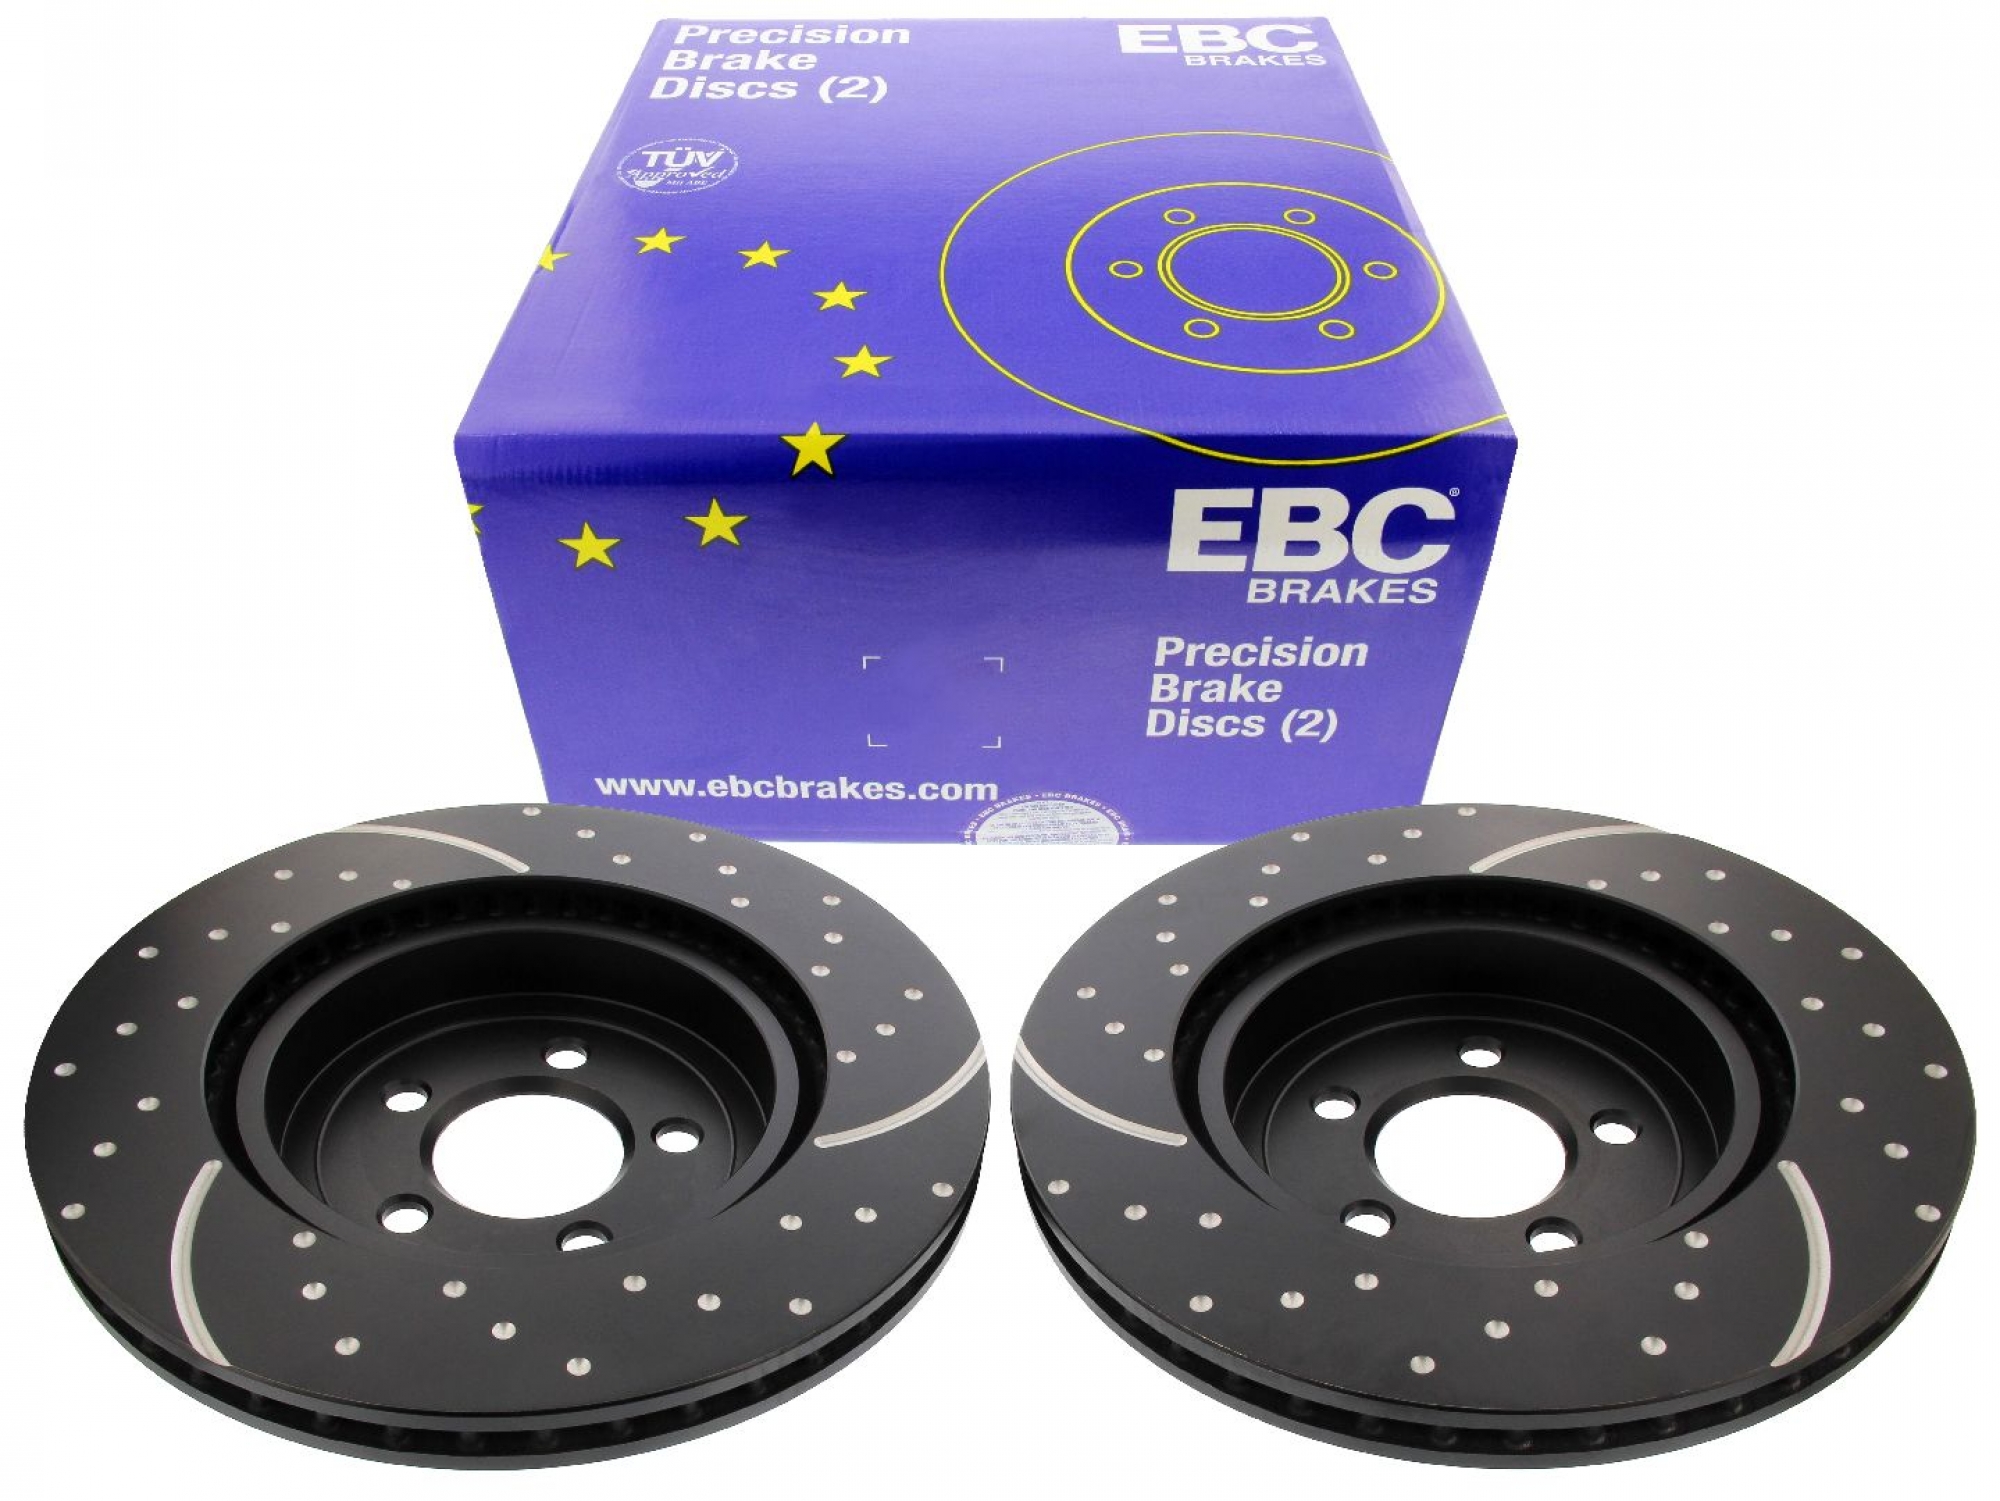 EBC-Bremsscheiben, Turbo Groove Disc Black (2-teilig), VA, Chrysler